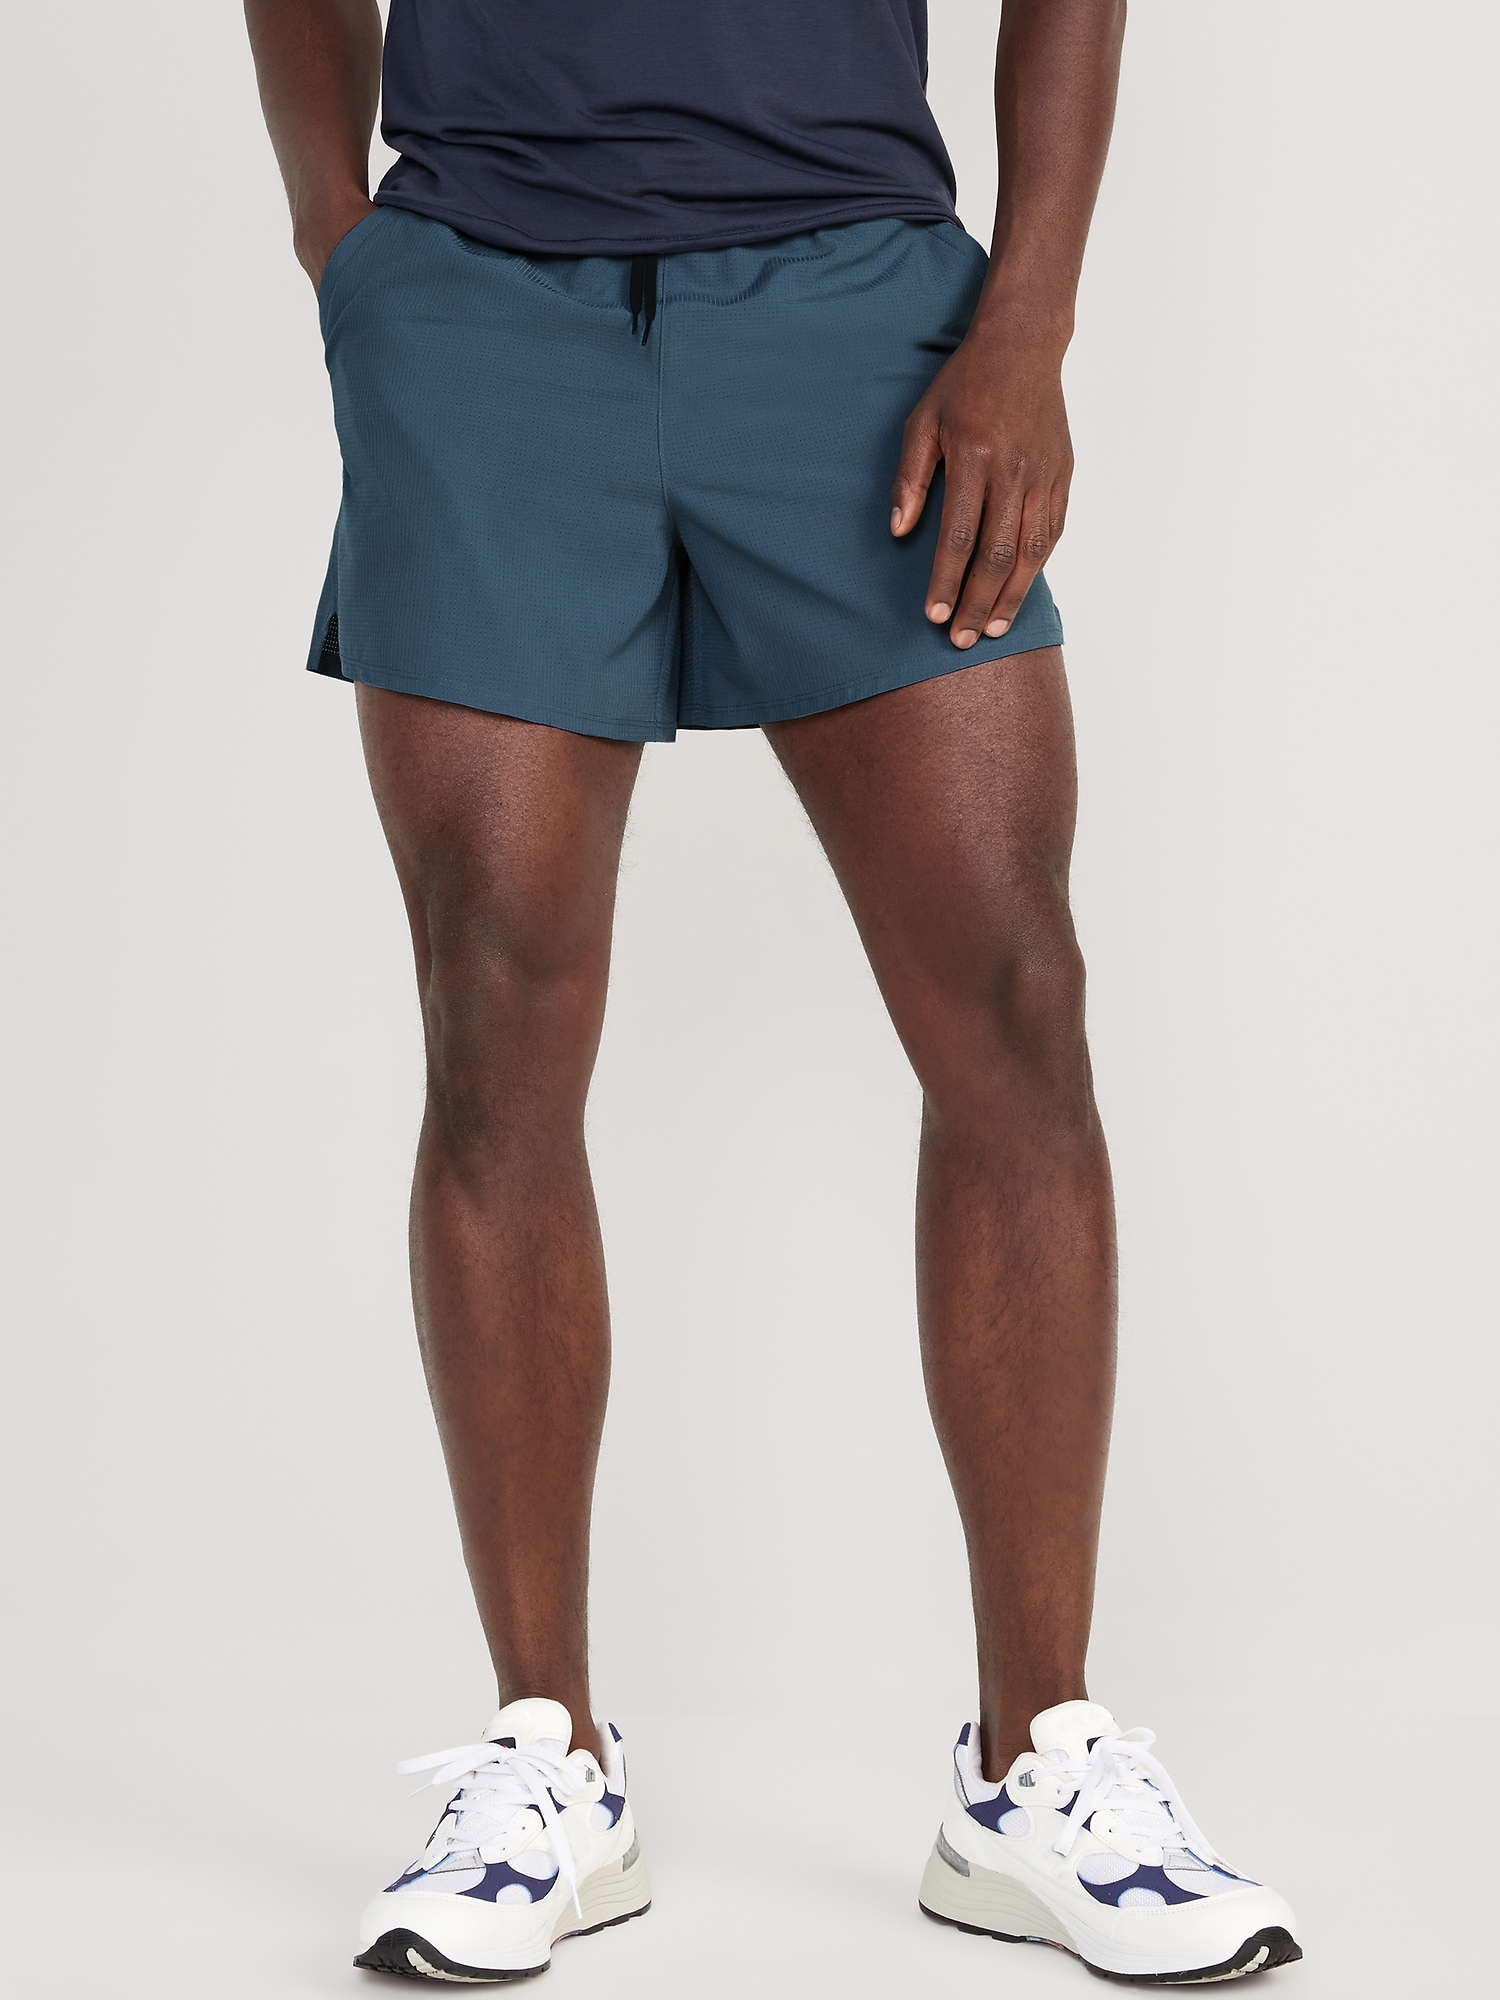 Old Navy StretchTech Dobby Run Shorts for Men -- 5-inch inseam blue. 1